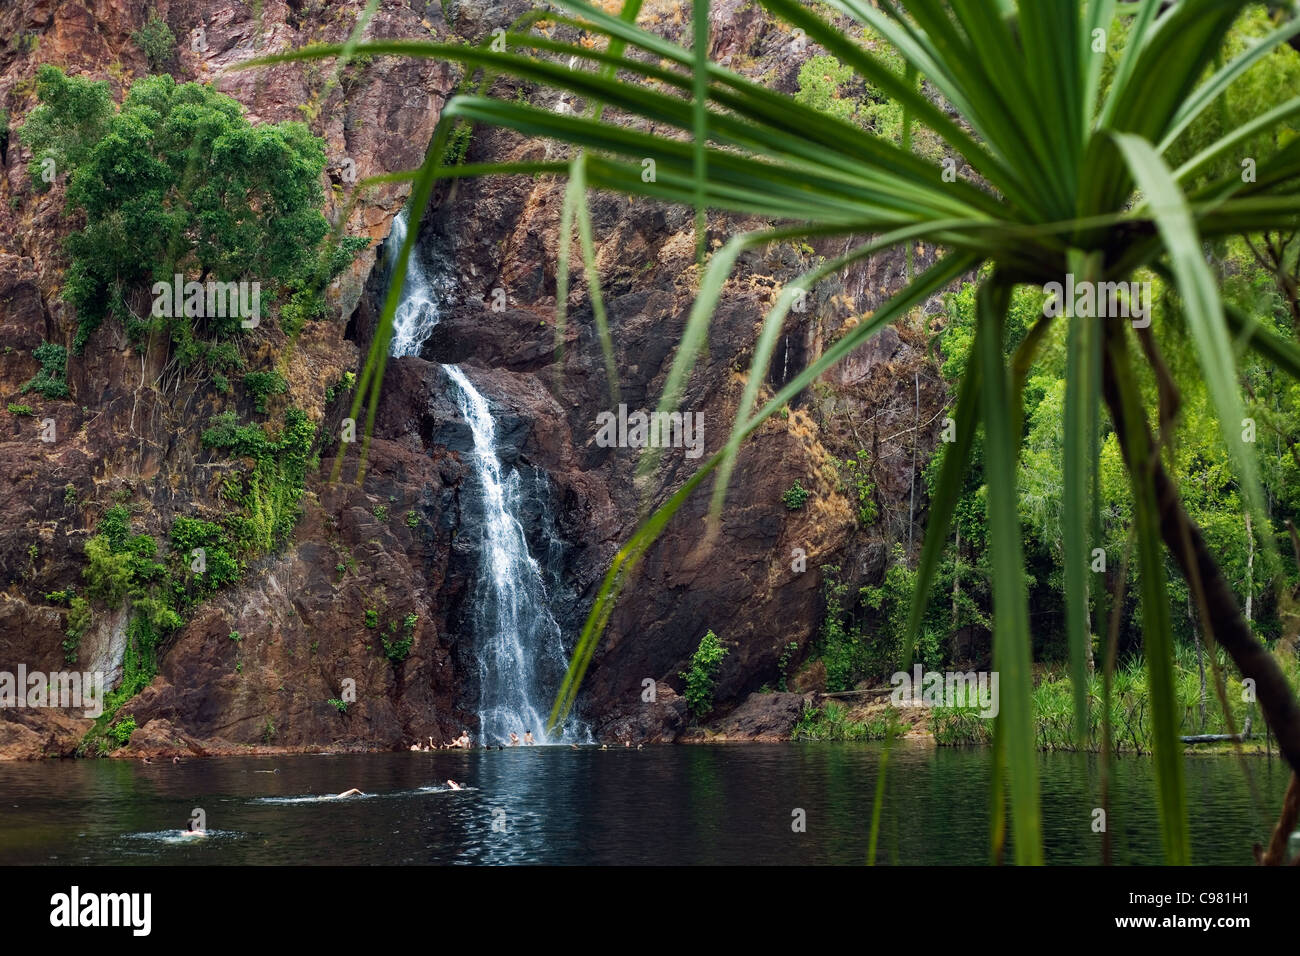 Wangi Falls - a popular waterfall surrounded by pandanus palms in Litchfield National Park, Northern Territory, Australia Stock Photo